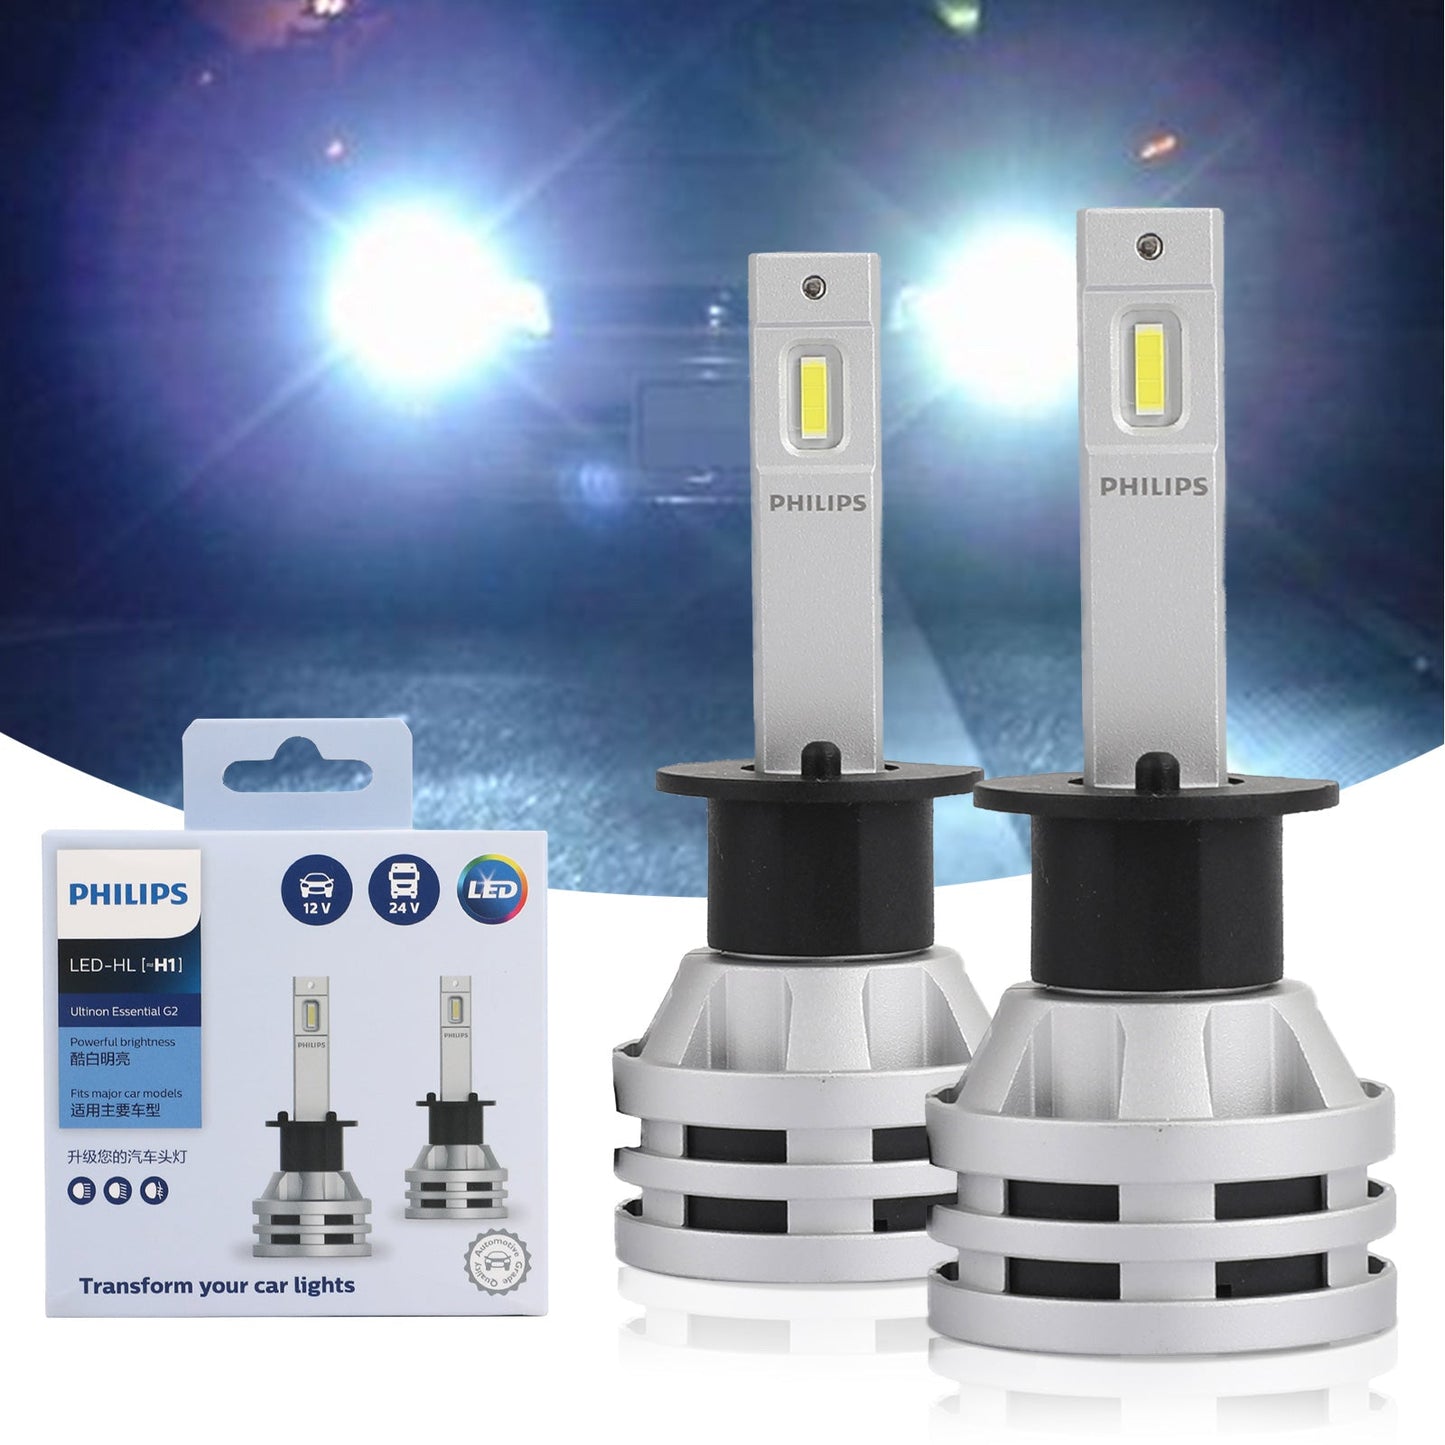 2 Stücke Ultinon Essential LED Für Philips LED-HL Scheinwerferlampen 12v/24v 19w 6500K